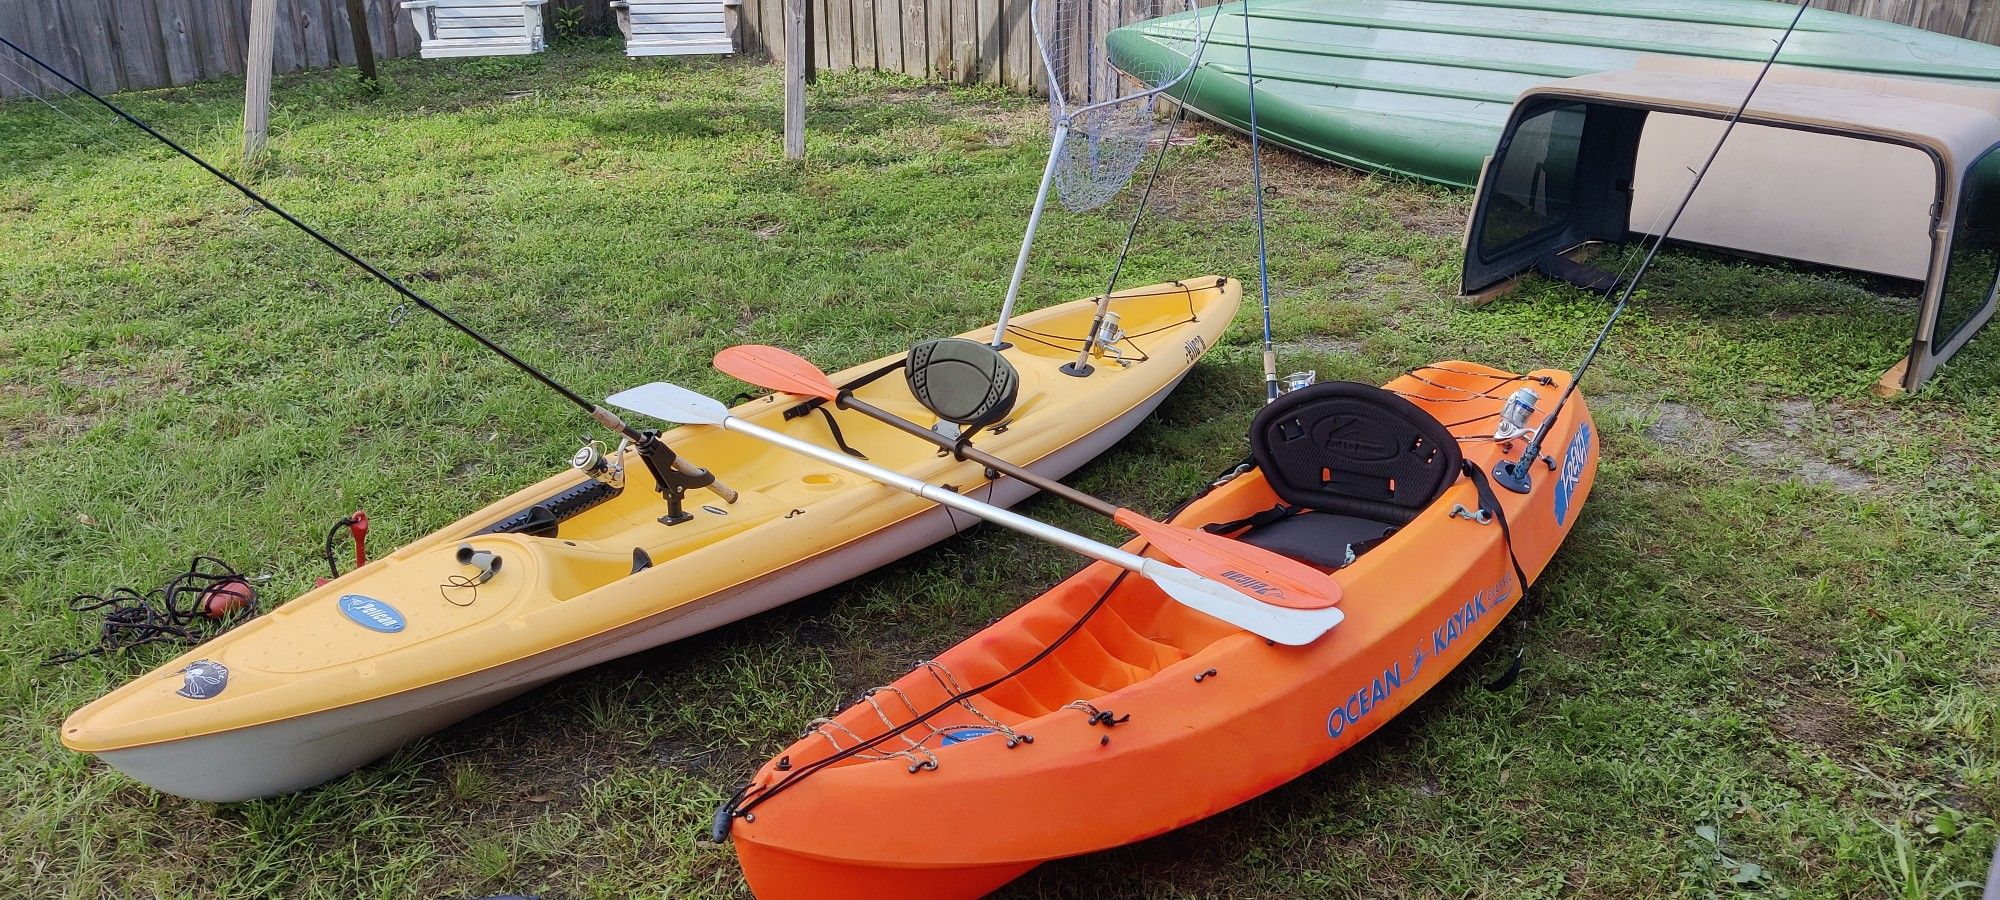 Kayaks For Sale $500 OBO, Pelican Eclipse 116 Deluxe & Ocean Kayak Frenzy.